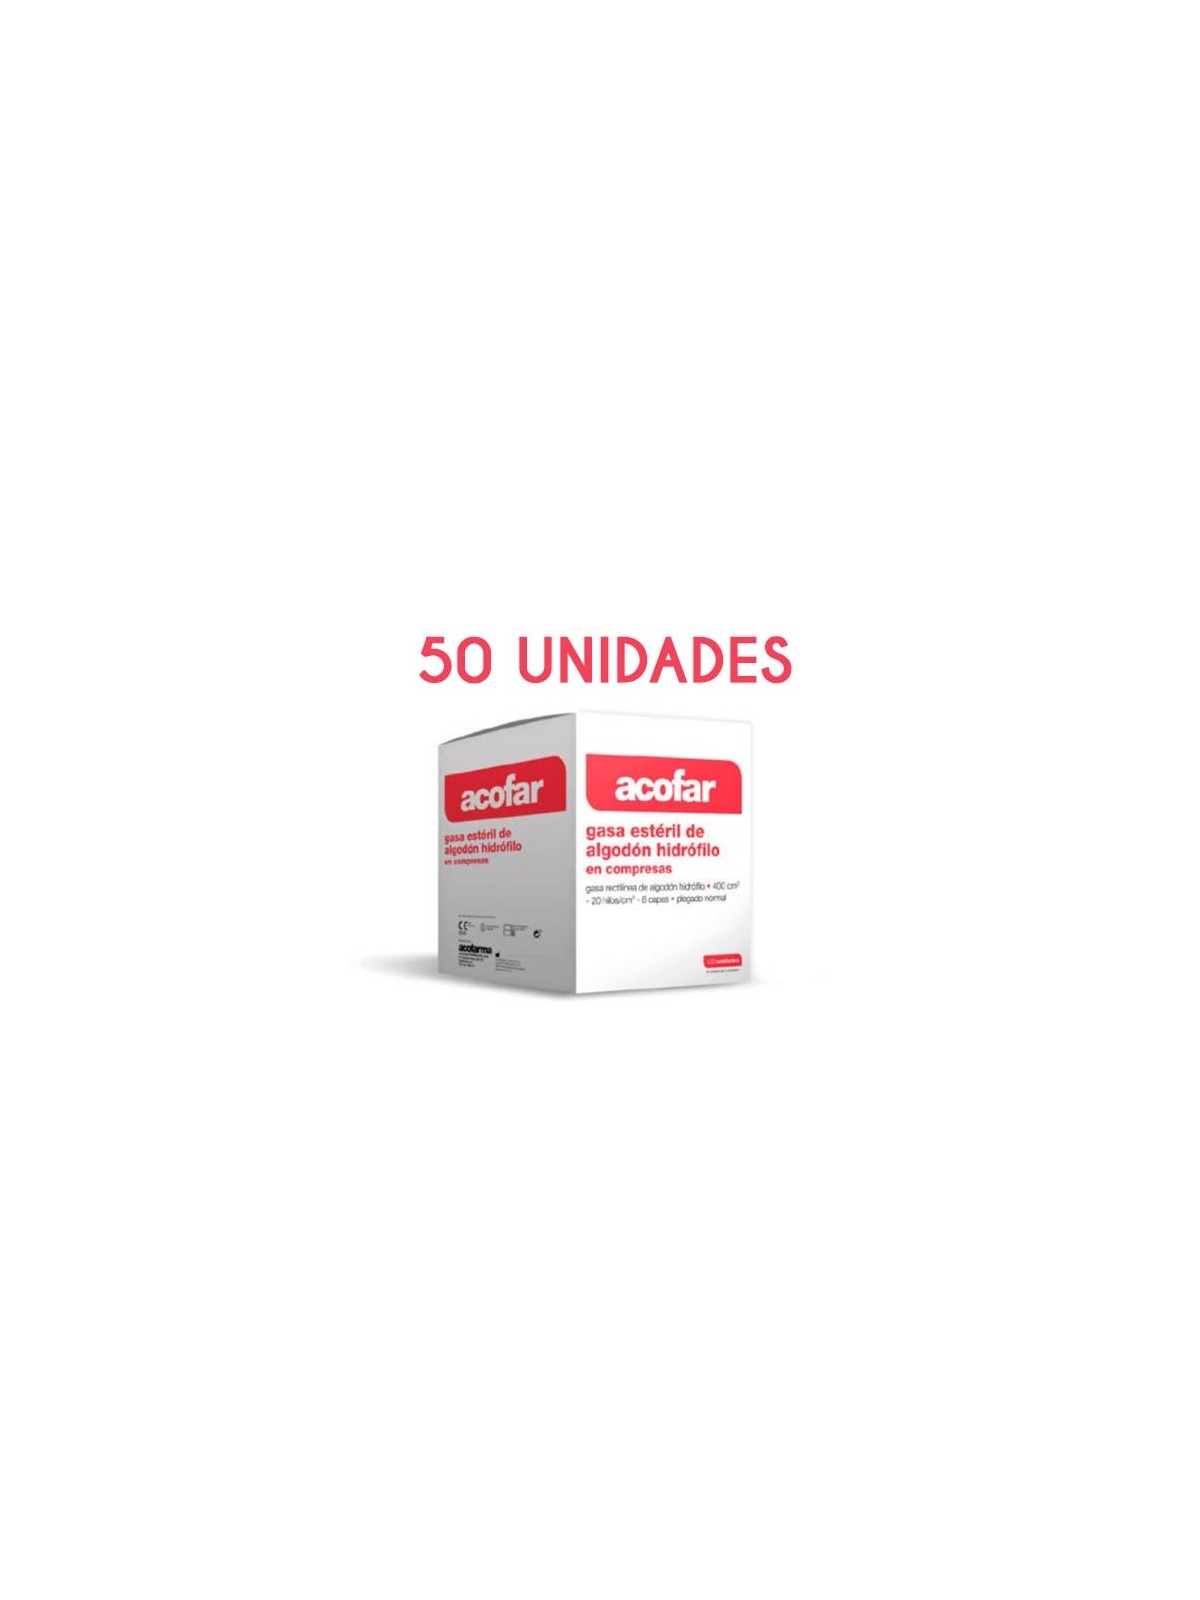 Colnatur Polvo Tarro 300 g - Sabor Neutro - Farmacias Medicity